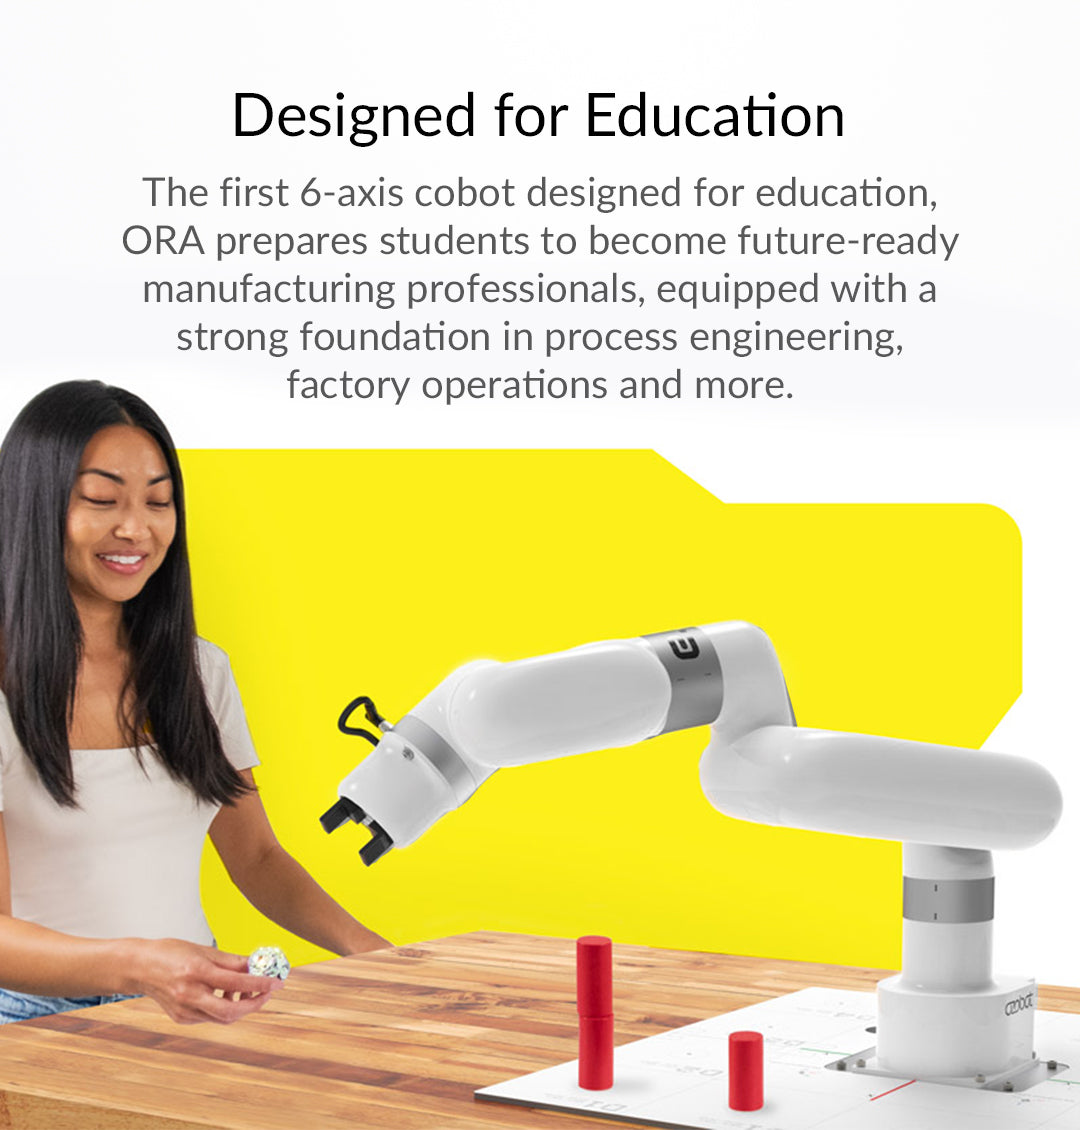 ORA Ozobot Robotic Arm collaborative robot cobot - best programmable robots for kids